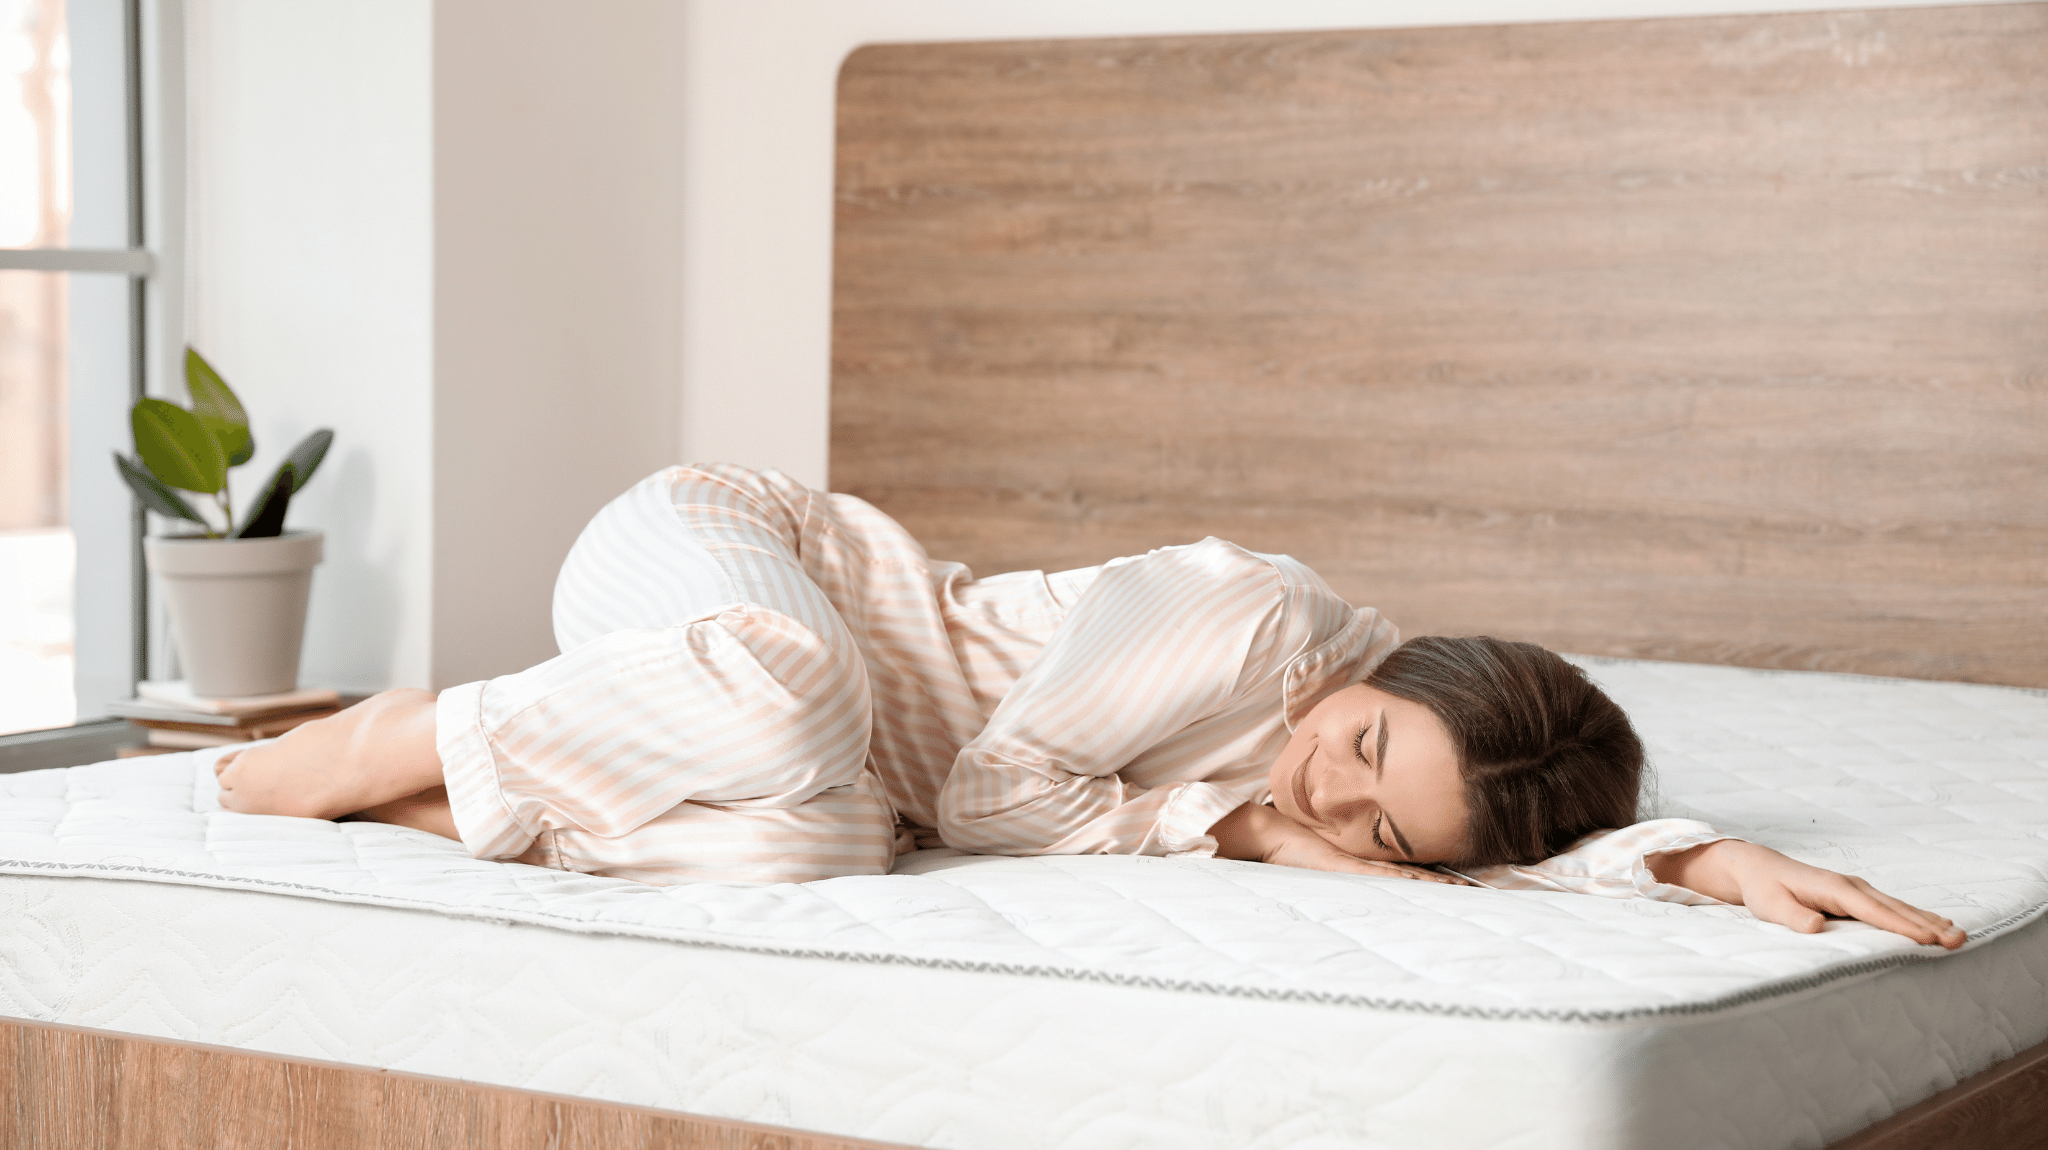 Eve Sleep Matelas Original Classic Hybrid - Confort Ferme